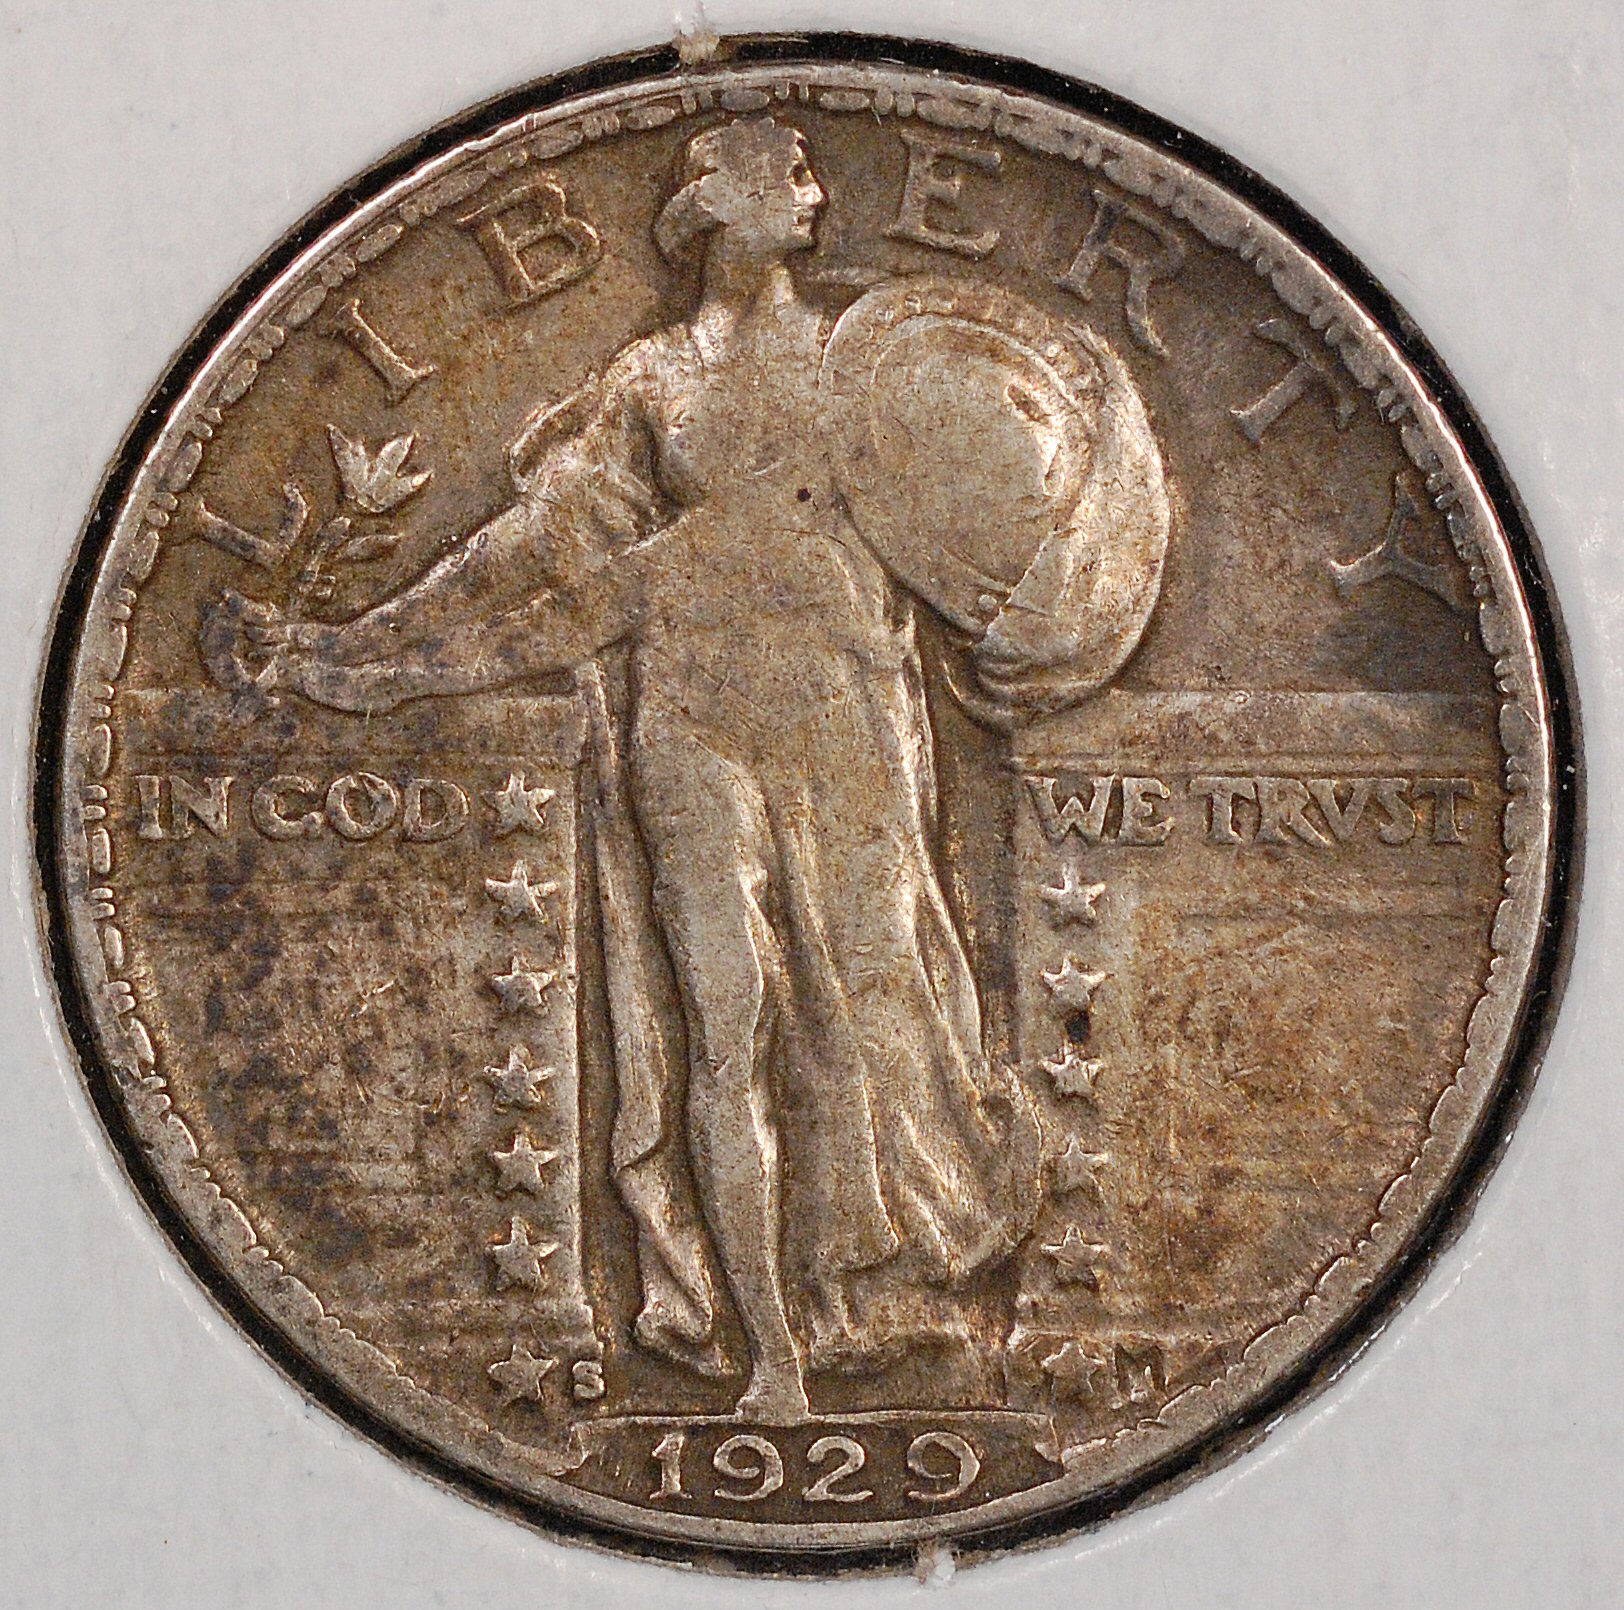 quarter standing liberty 1929-s obv.jpg